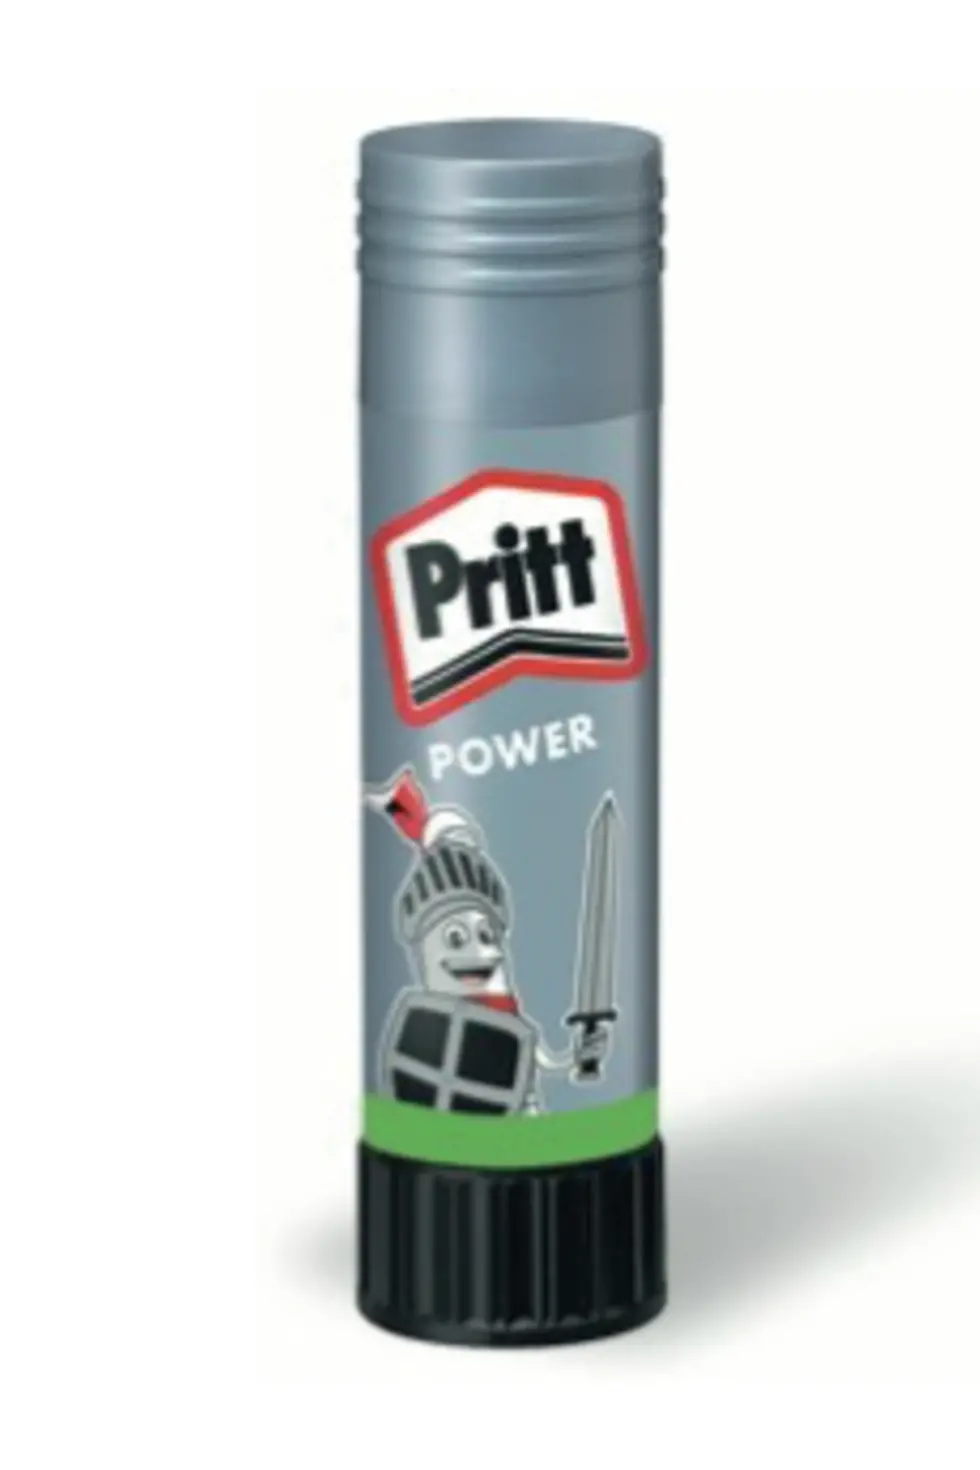 Pritt Power